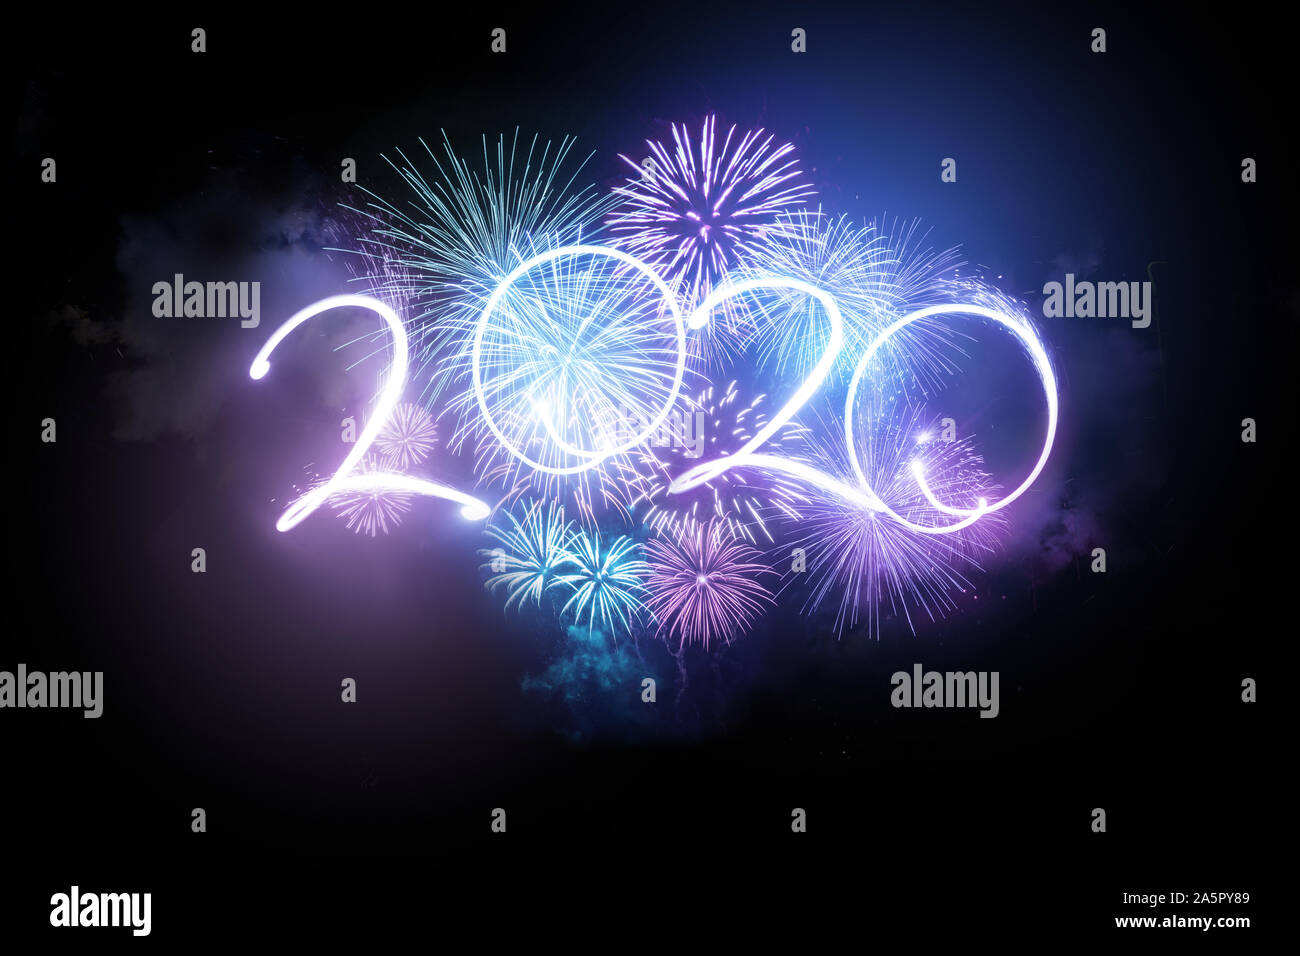 2020 happy new year fireworks display background. Stock Photo